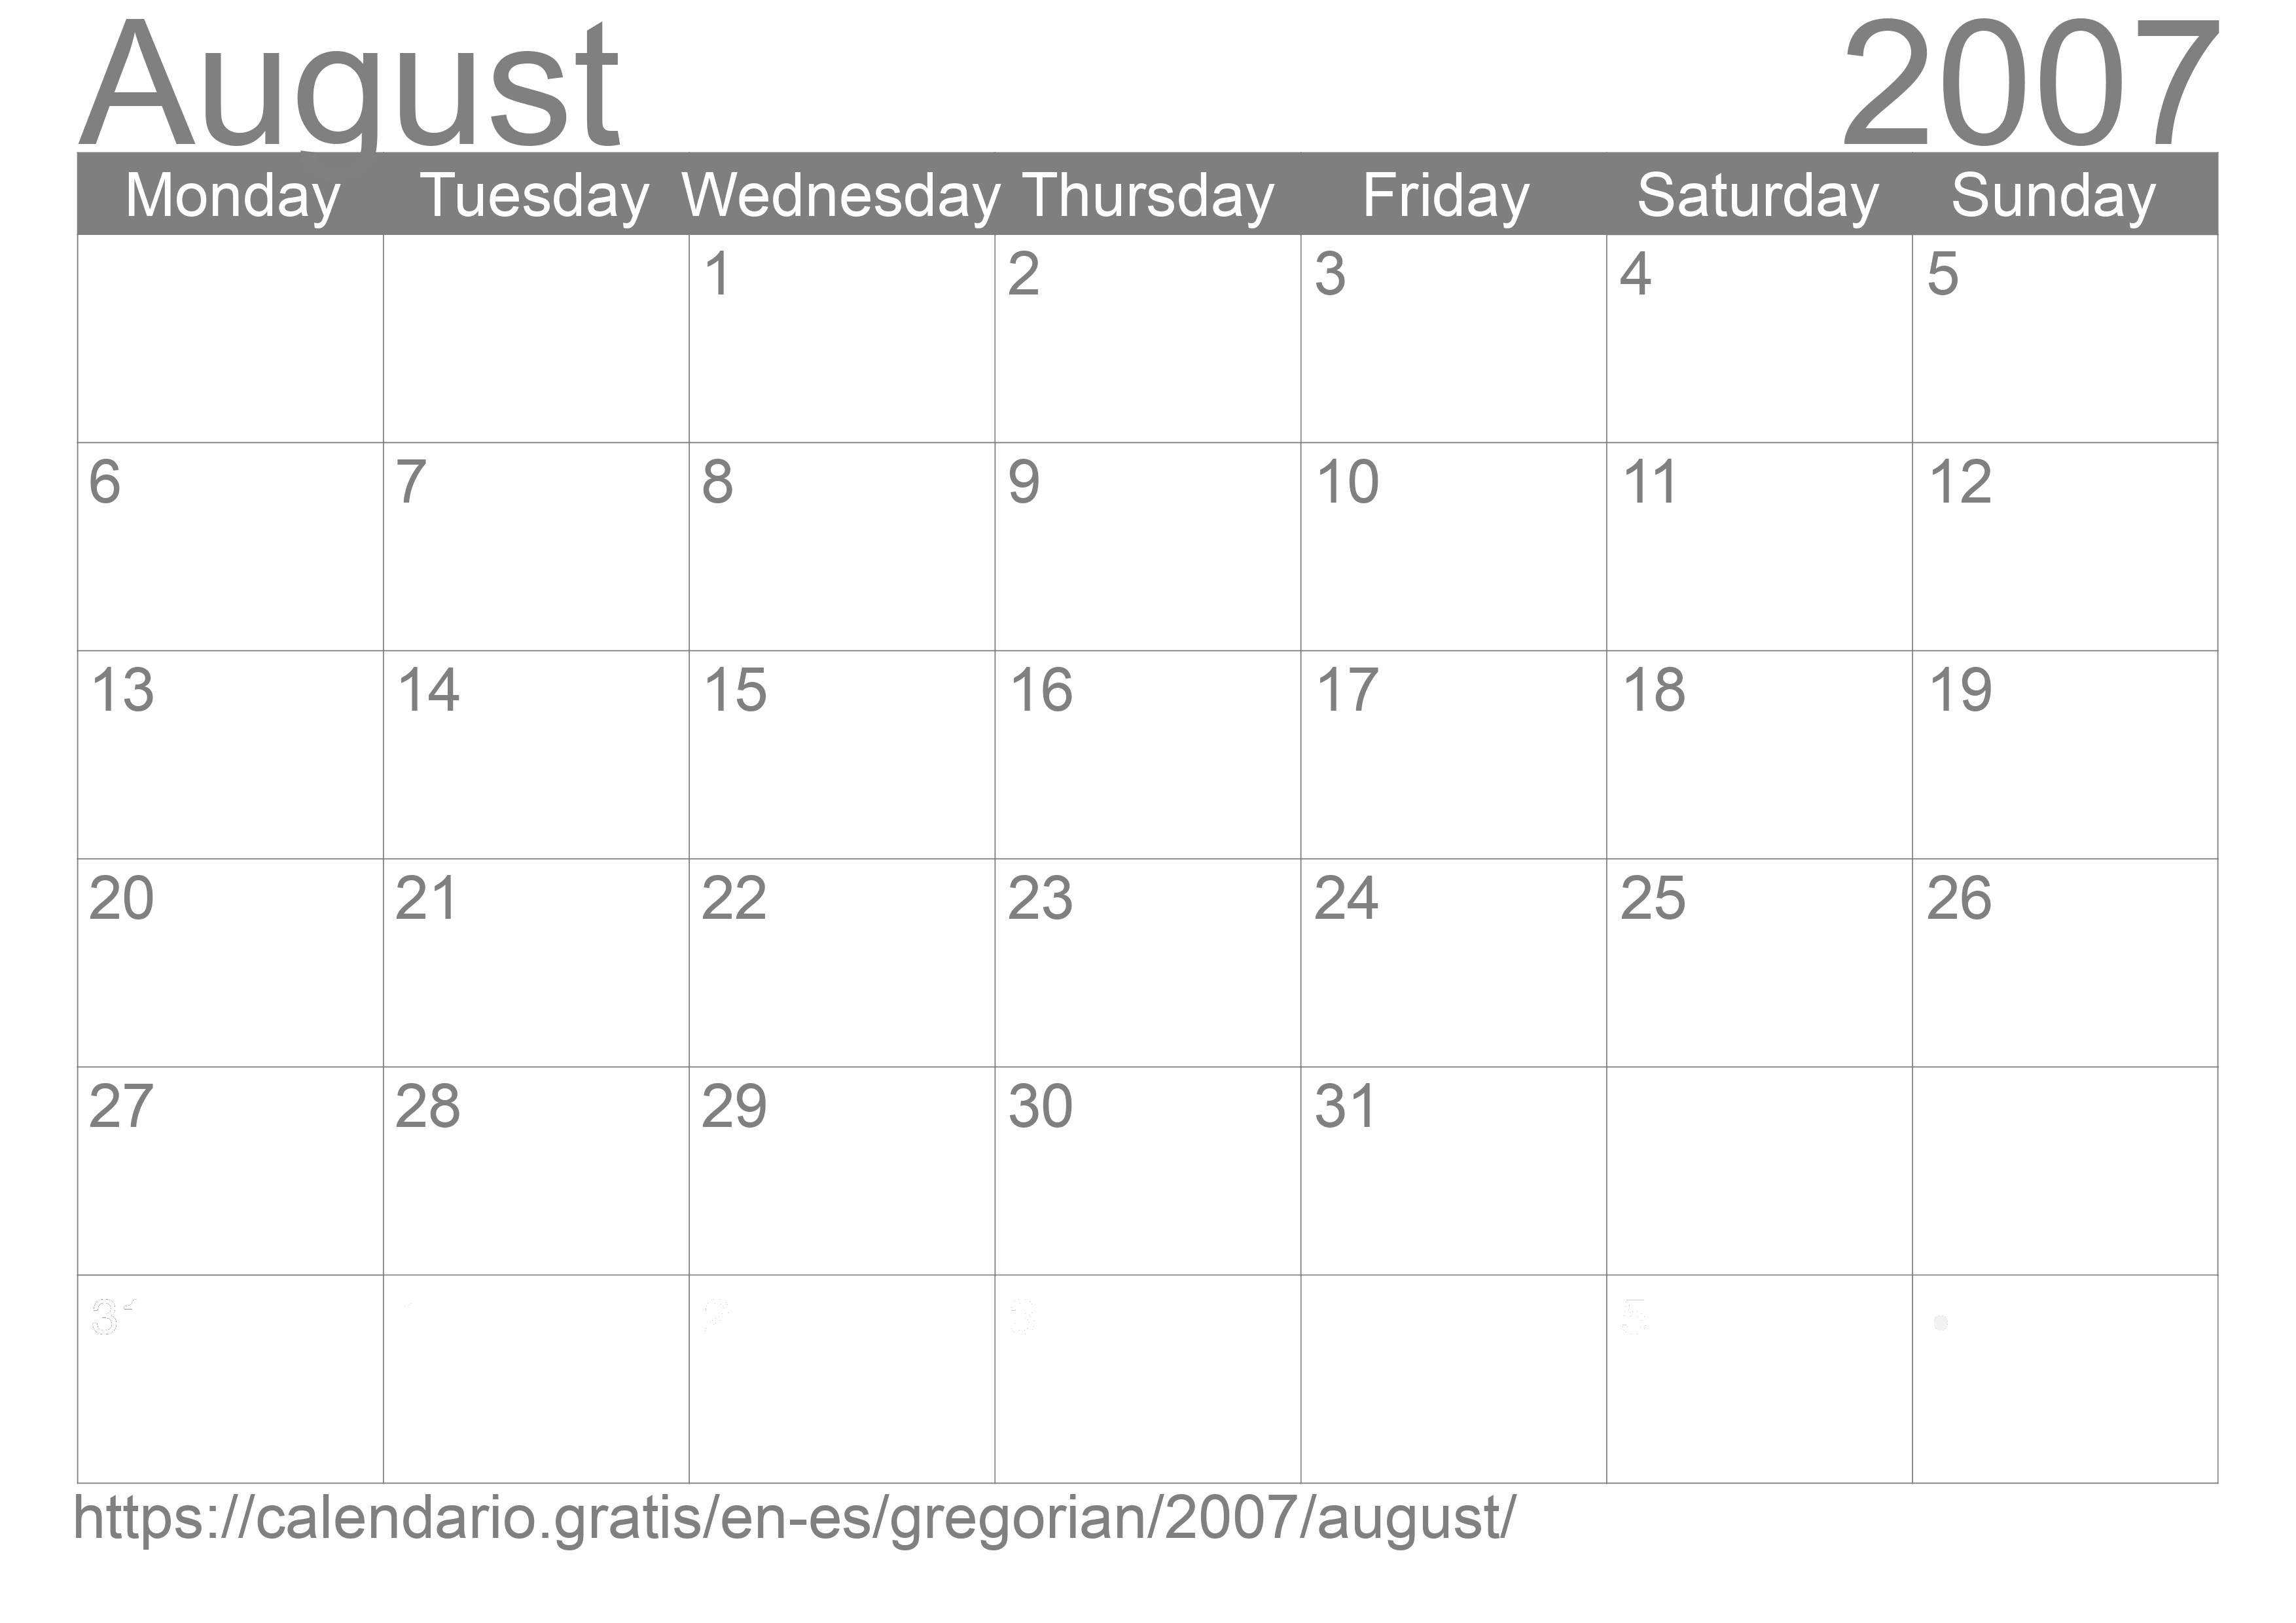 Calendar August 2007 to print